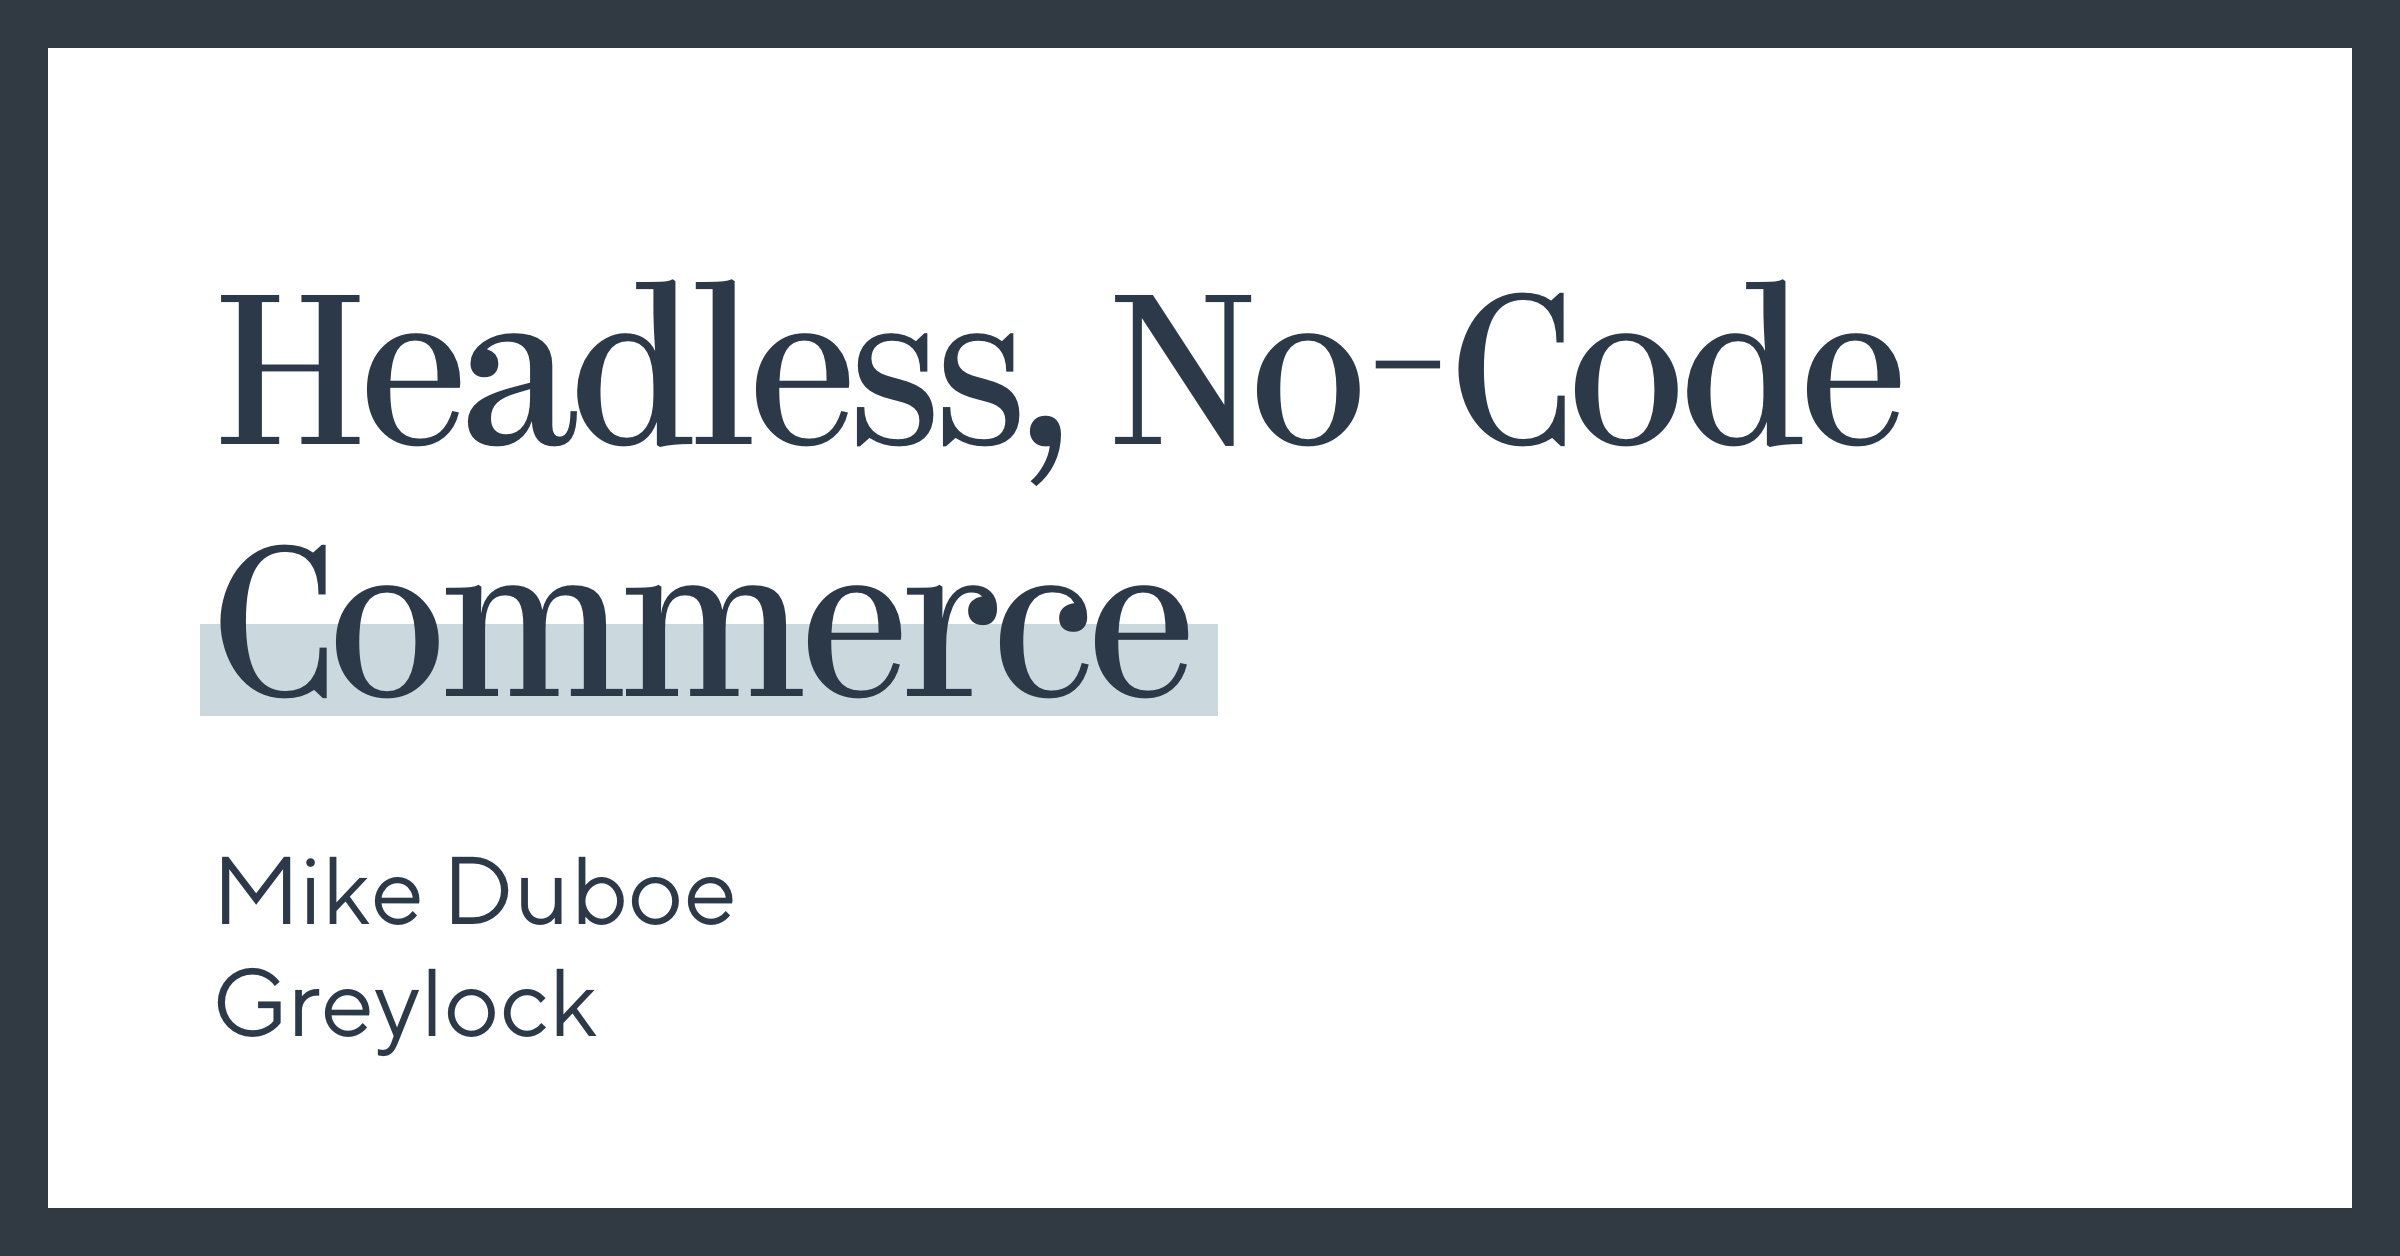 Headless, No-Code Commerce